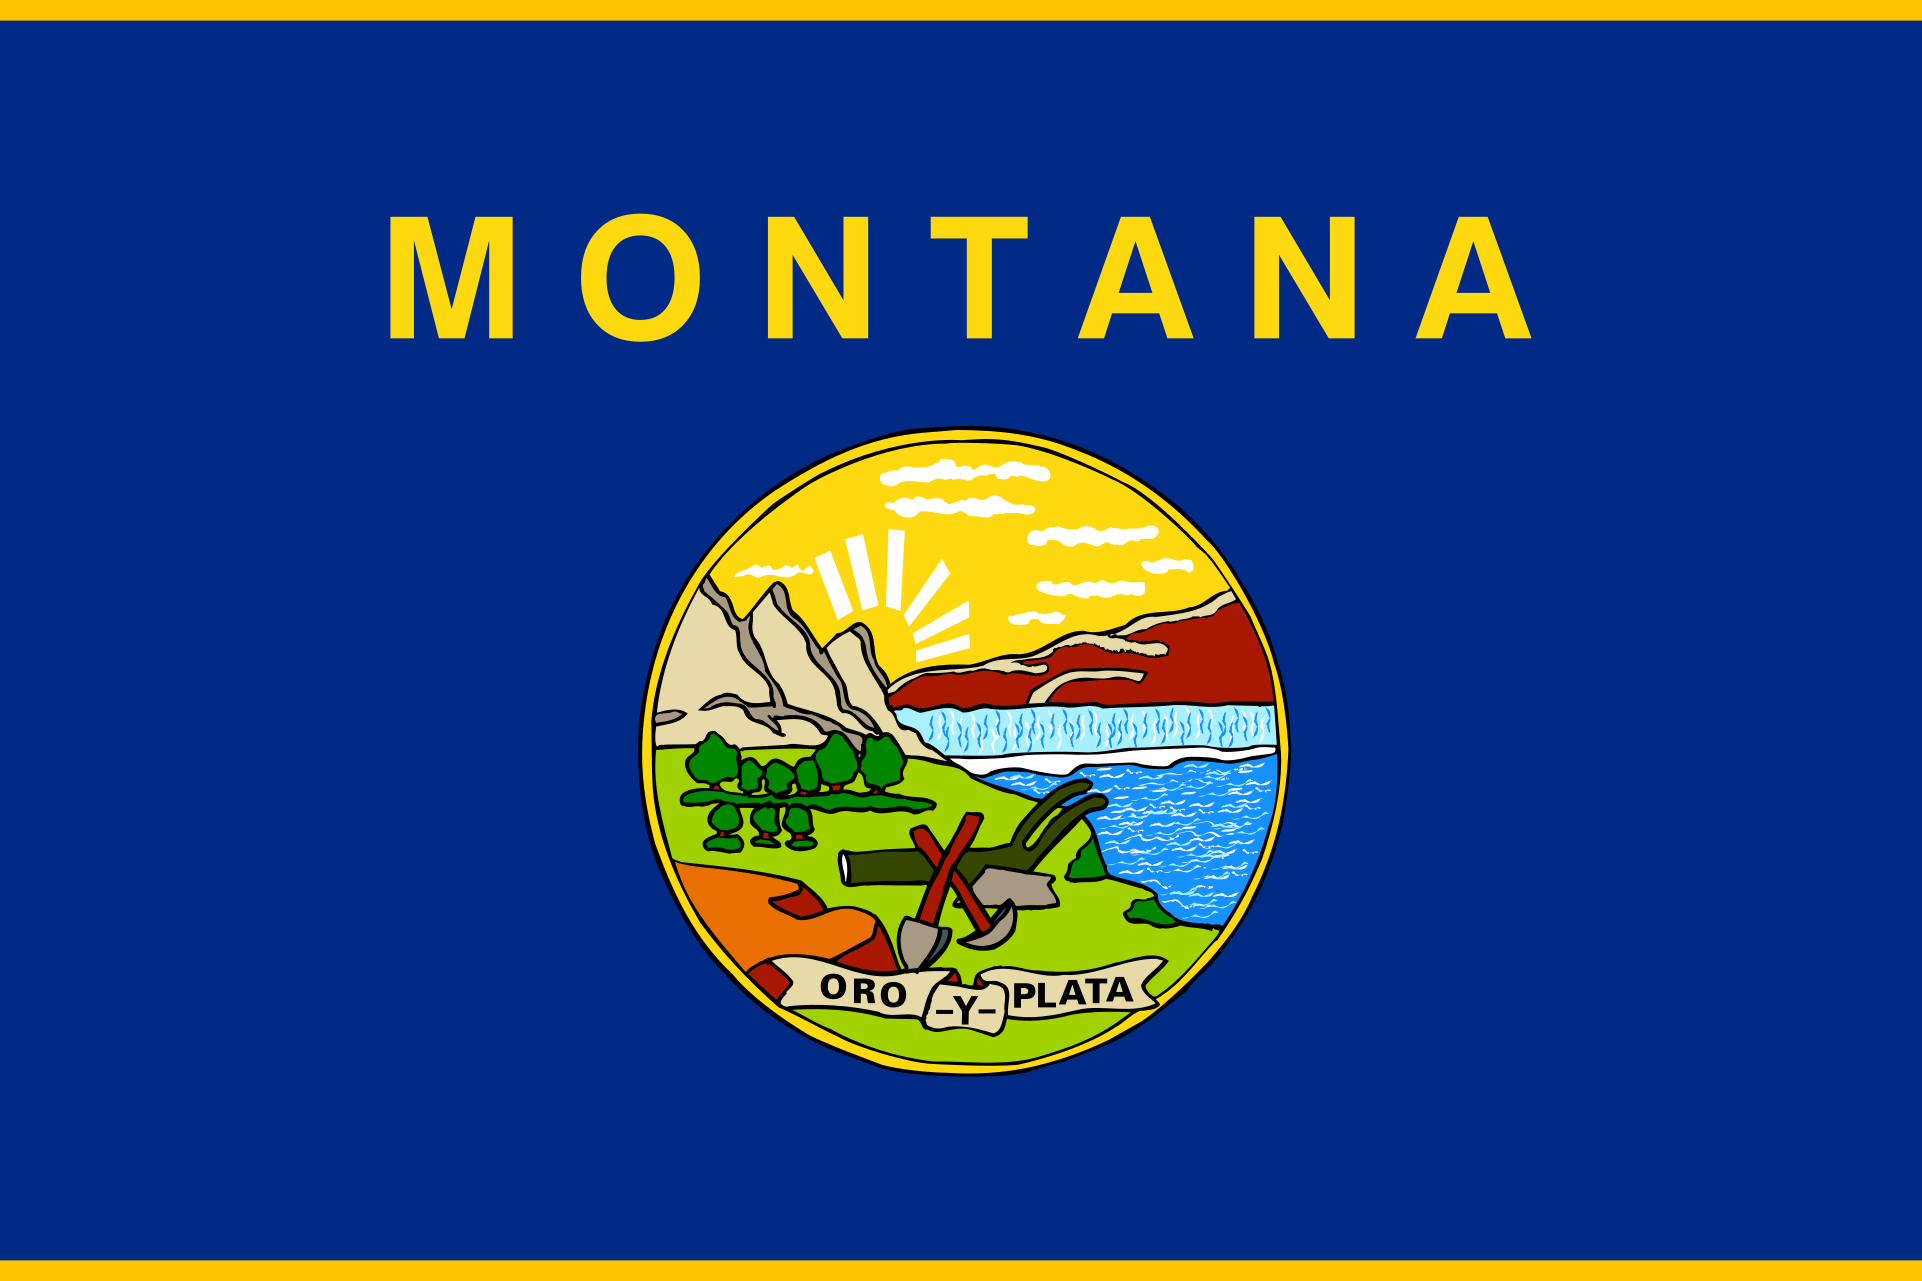 Free Montana Flag Images: AI, EPS, GIF, JPG, PDF, PNG, SVG and more!